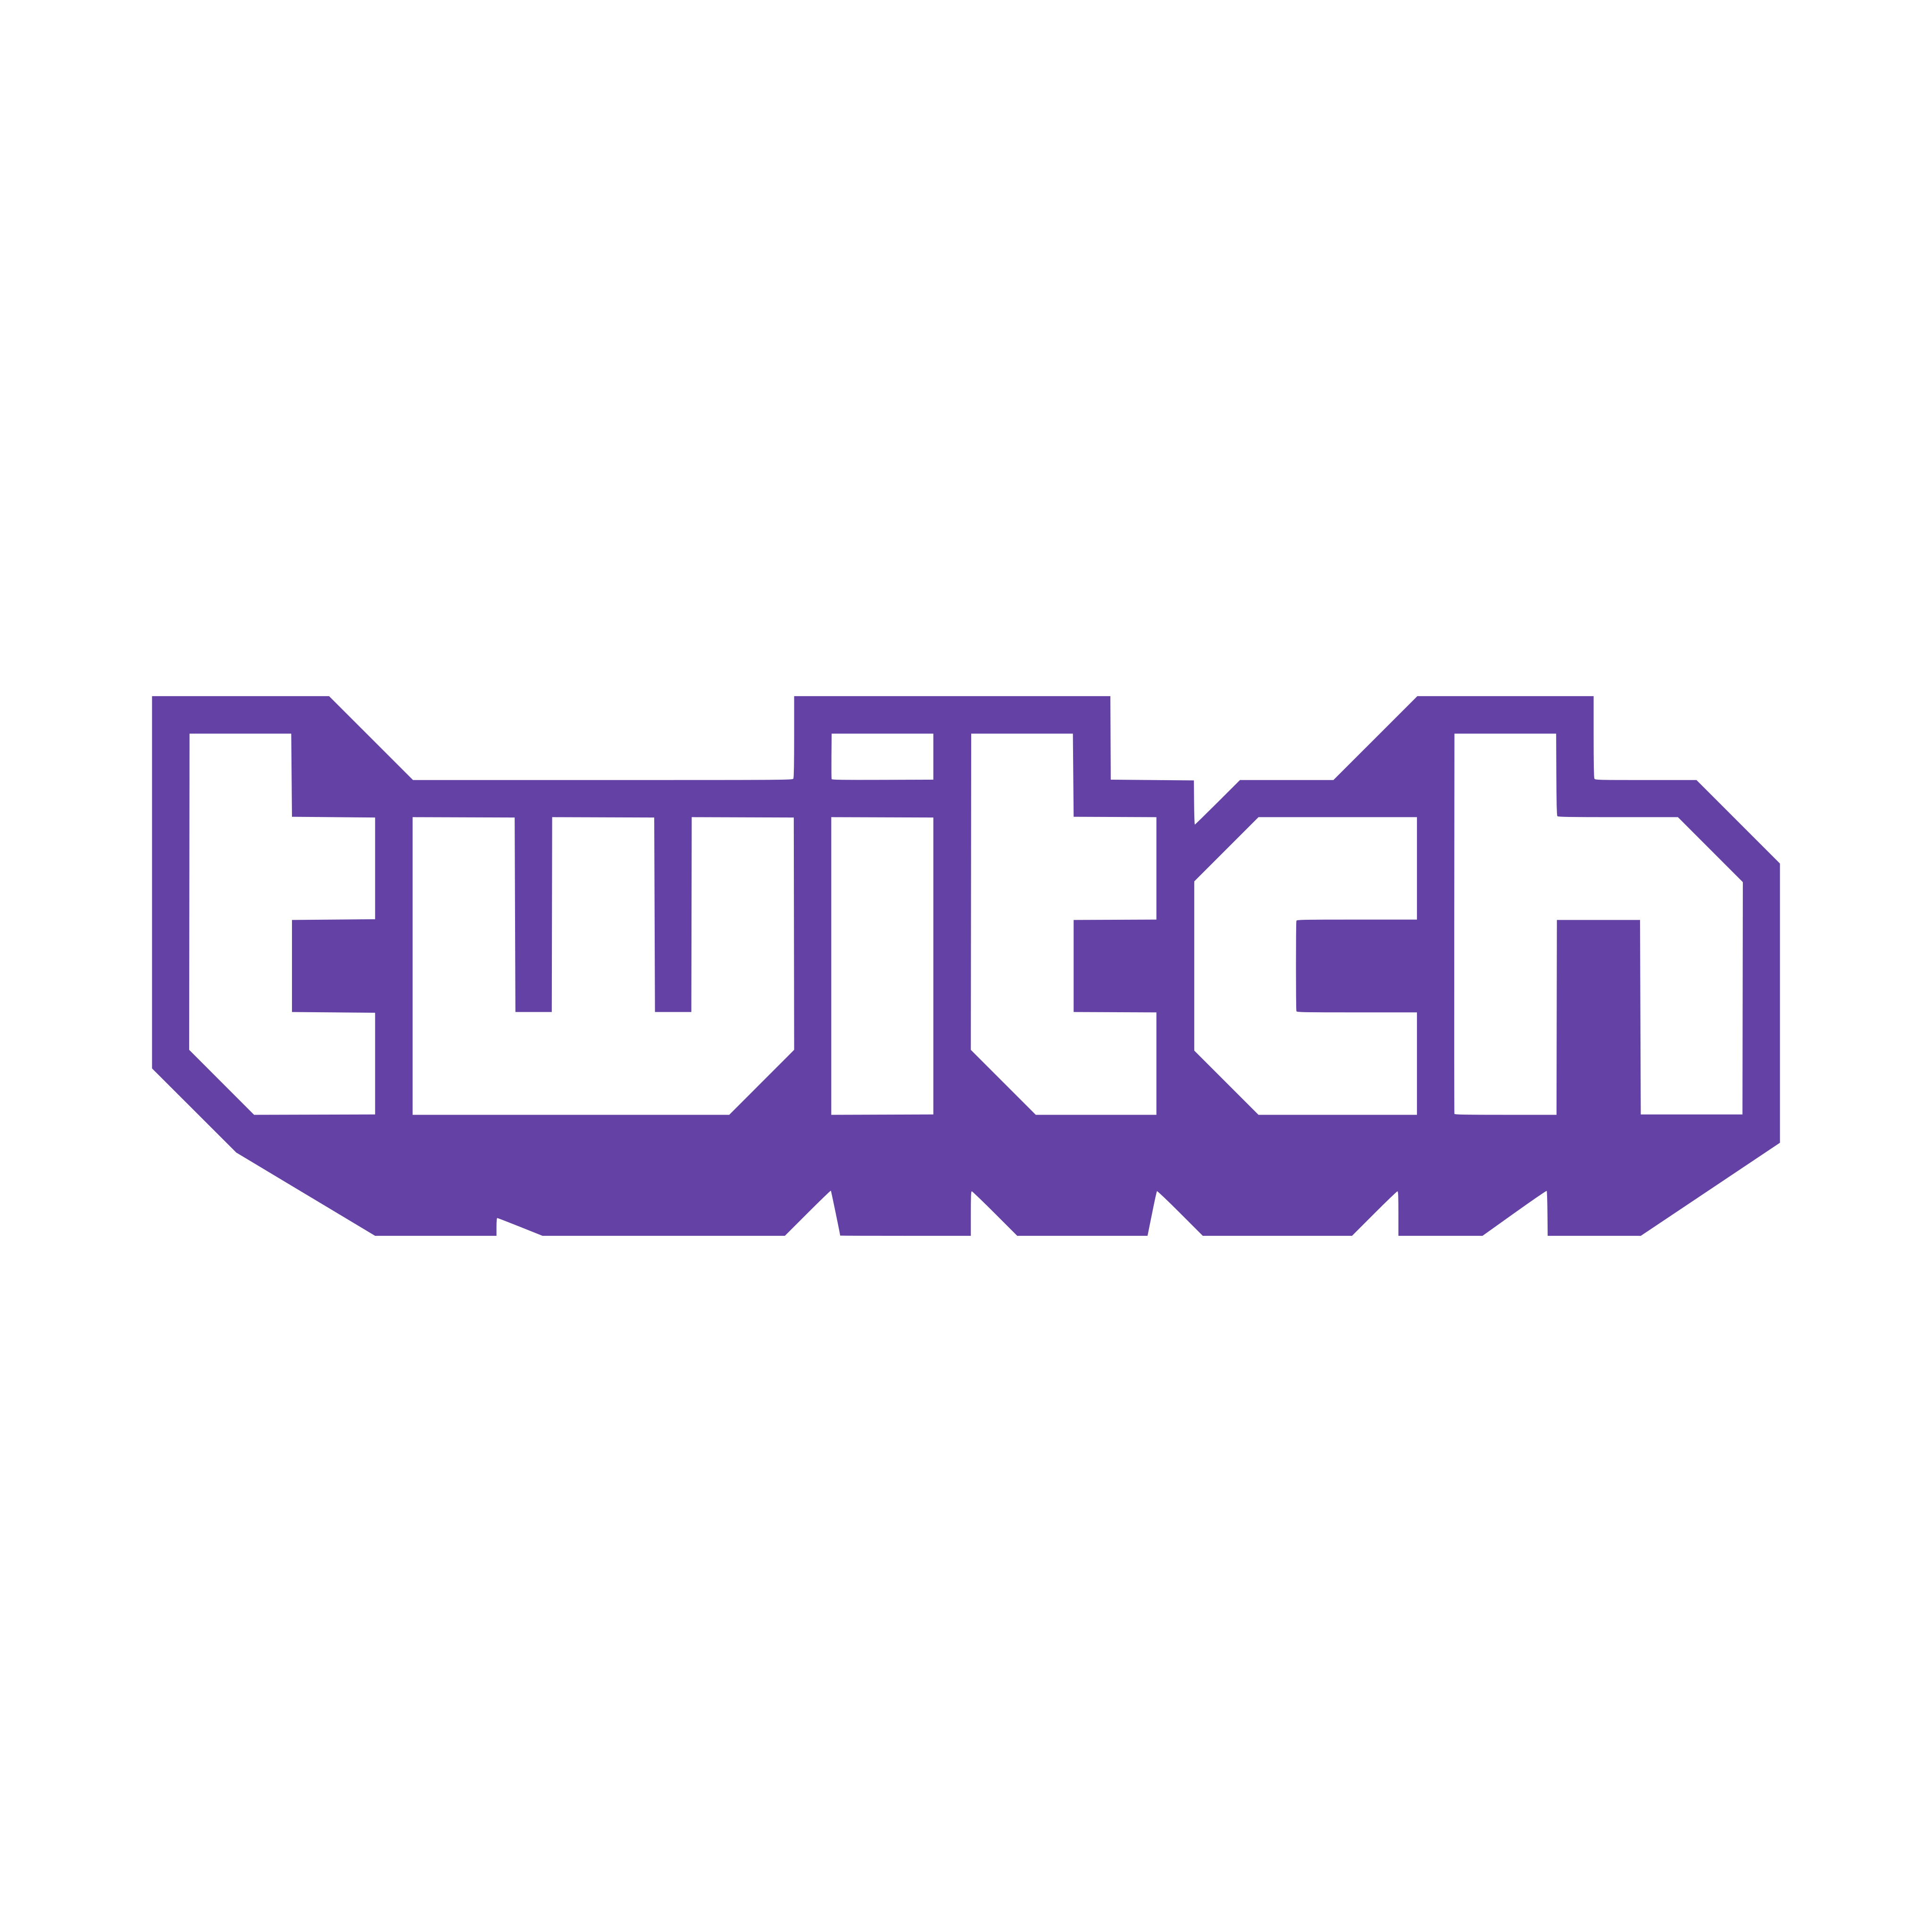 Twitch Logo PNG Image HD